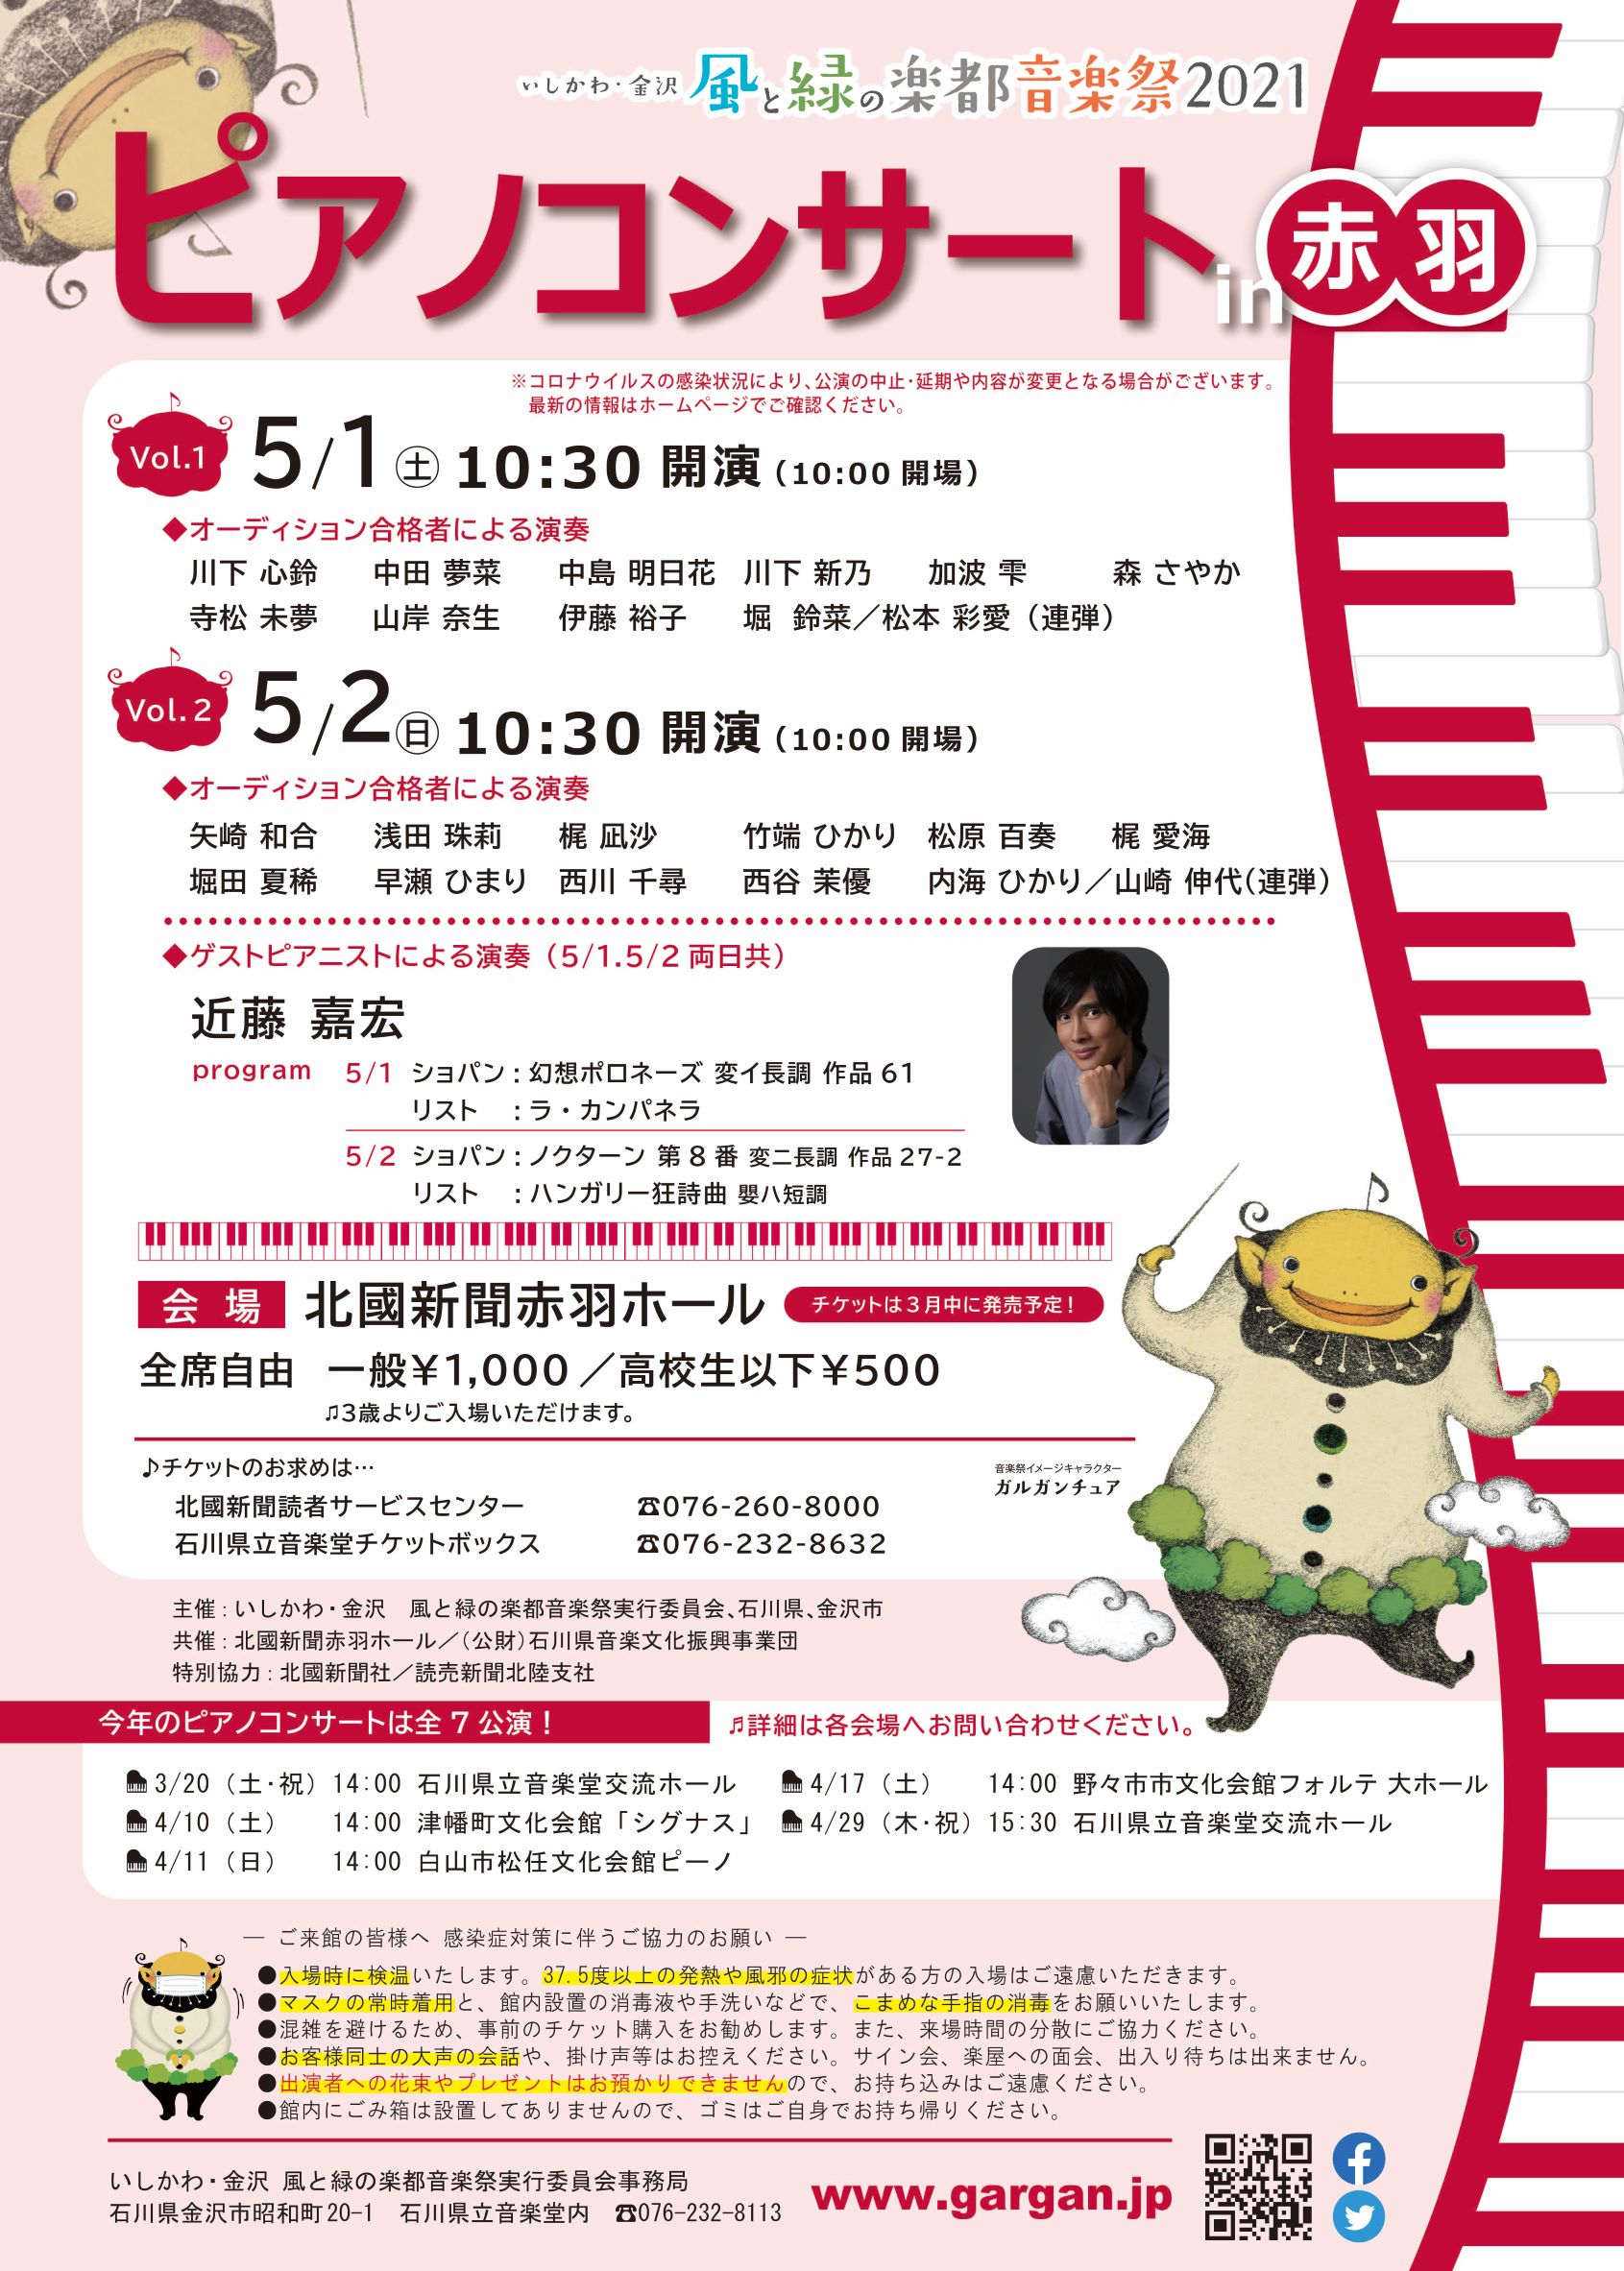 Concert Flyer いしかわ 金沢 風と緑の楽都音楽祭 21